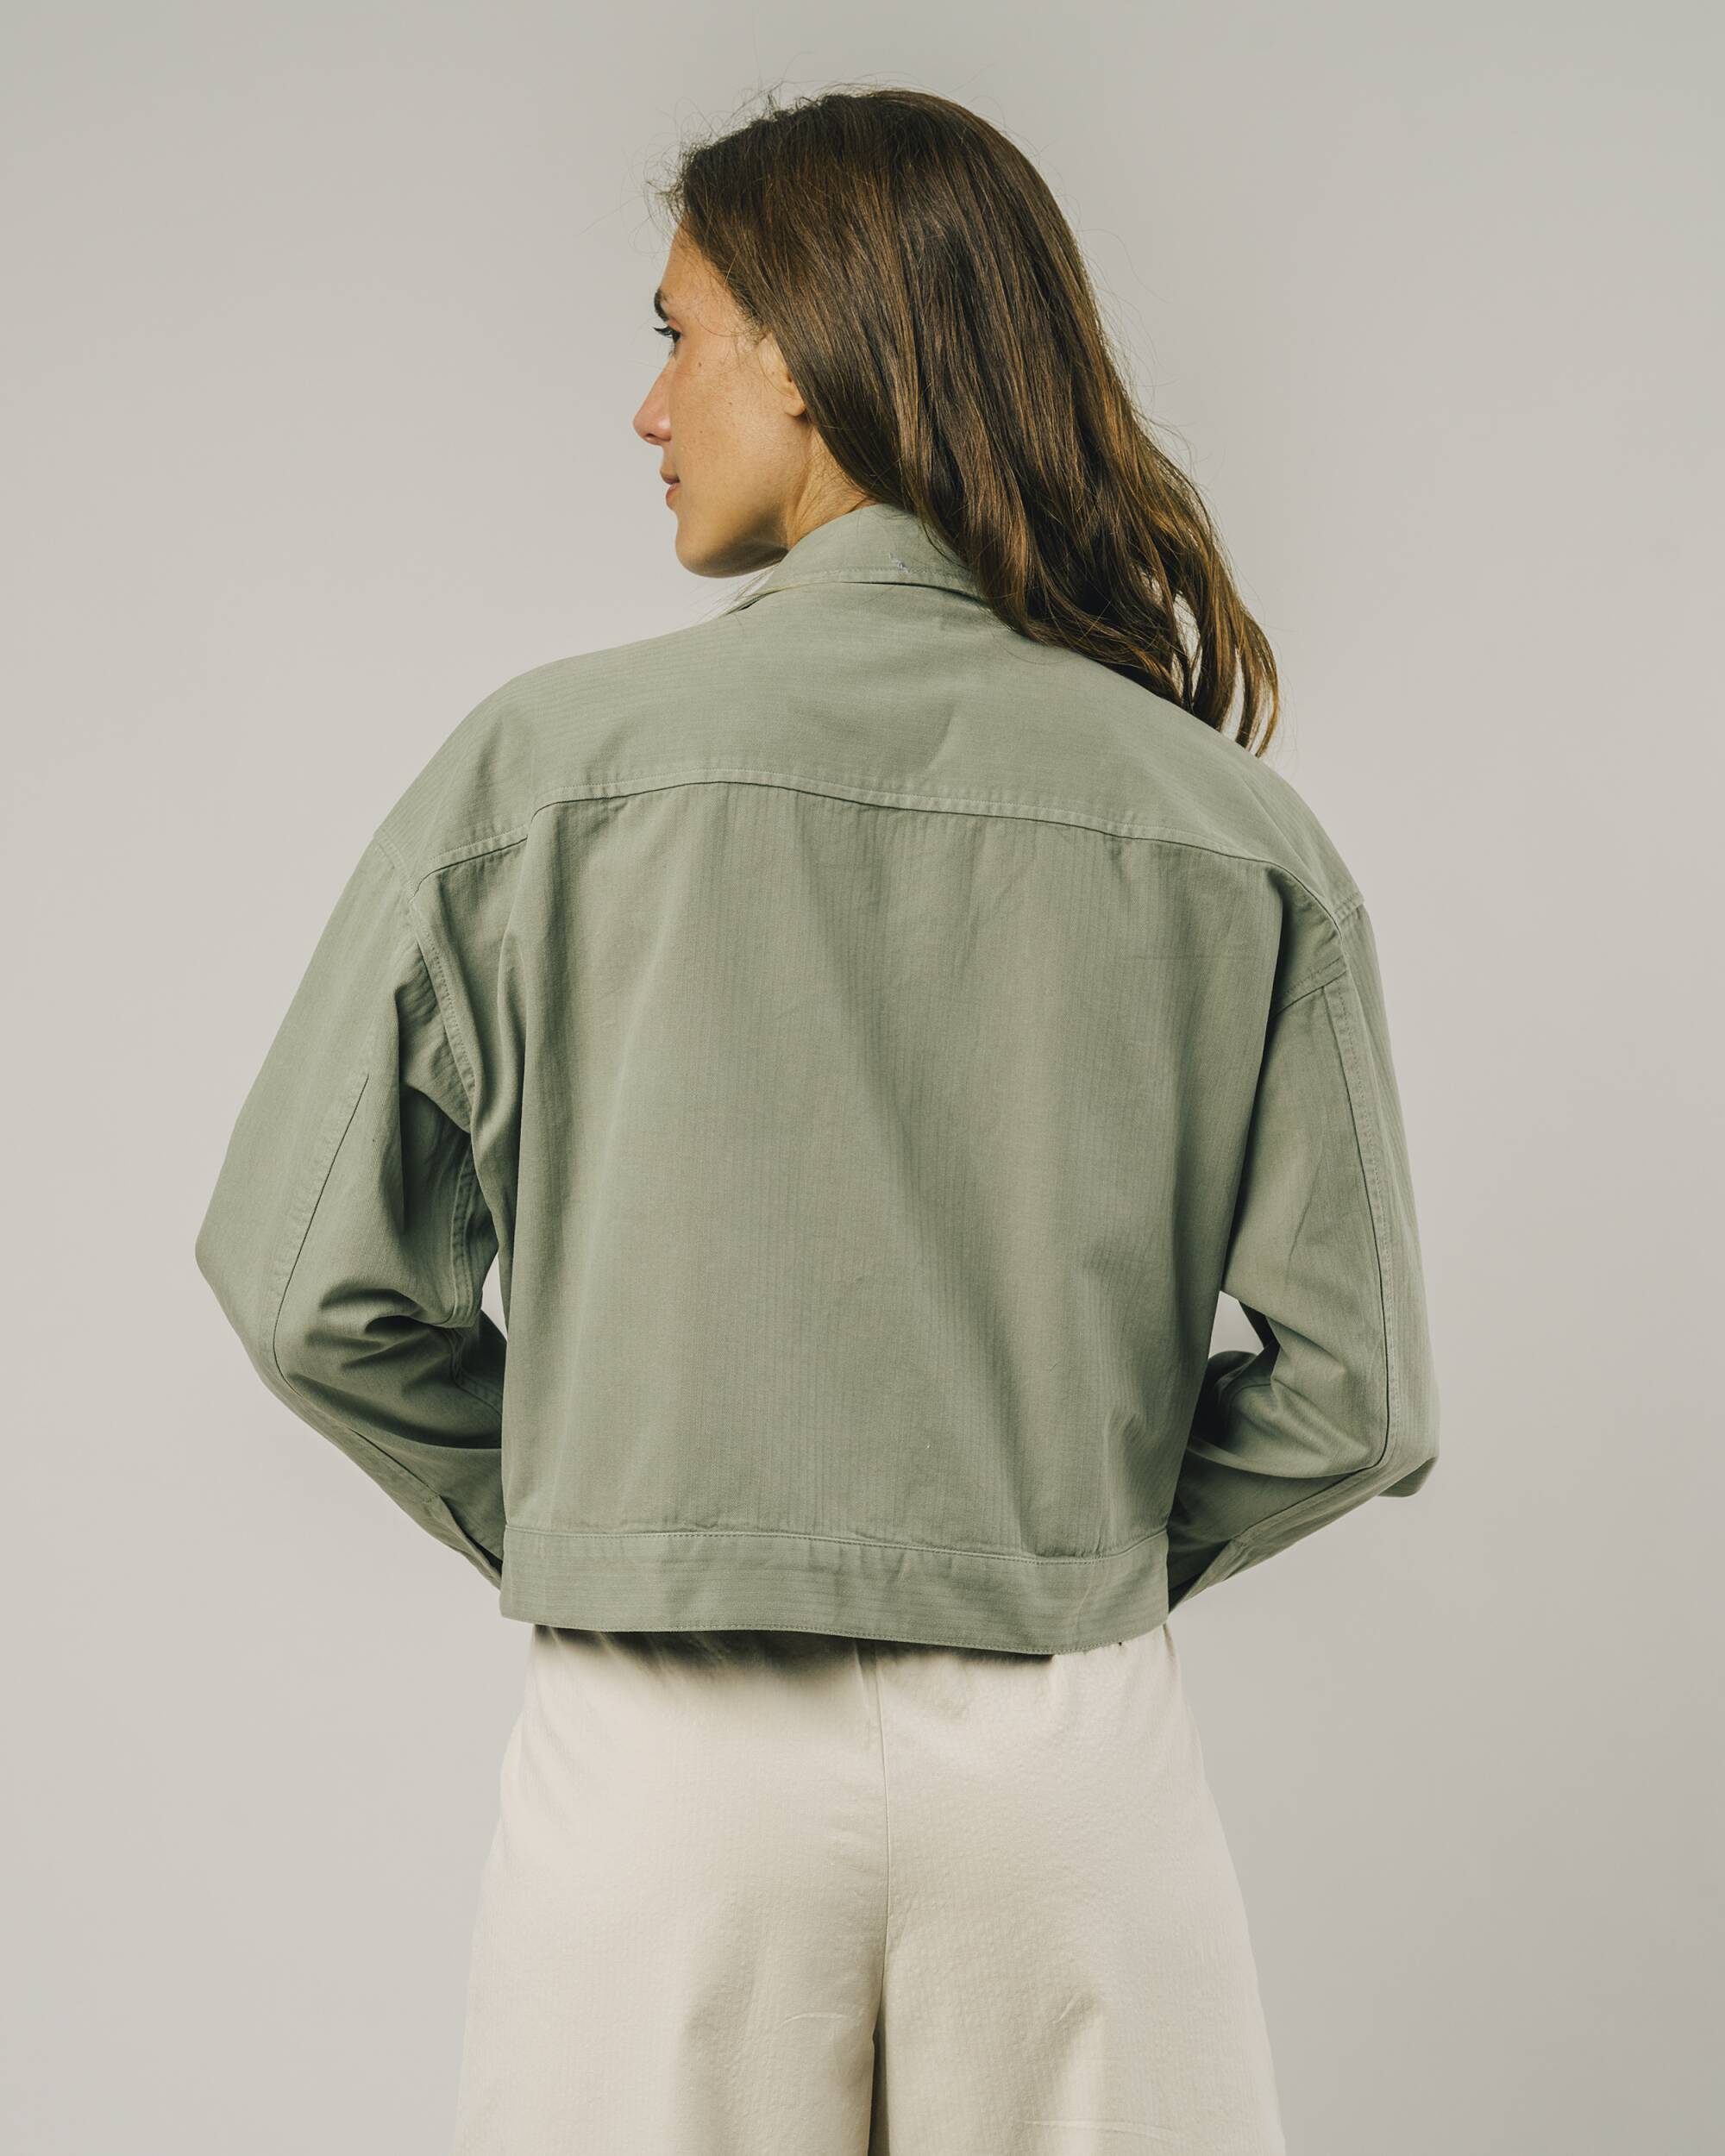 Veste oversize verte en coton 100% biologique de Brava Fabrics